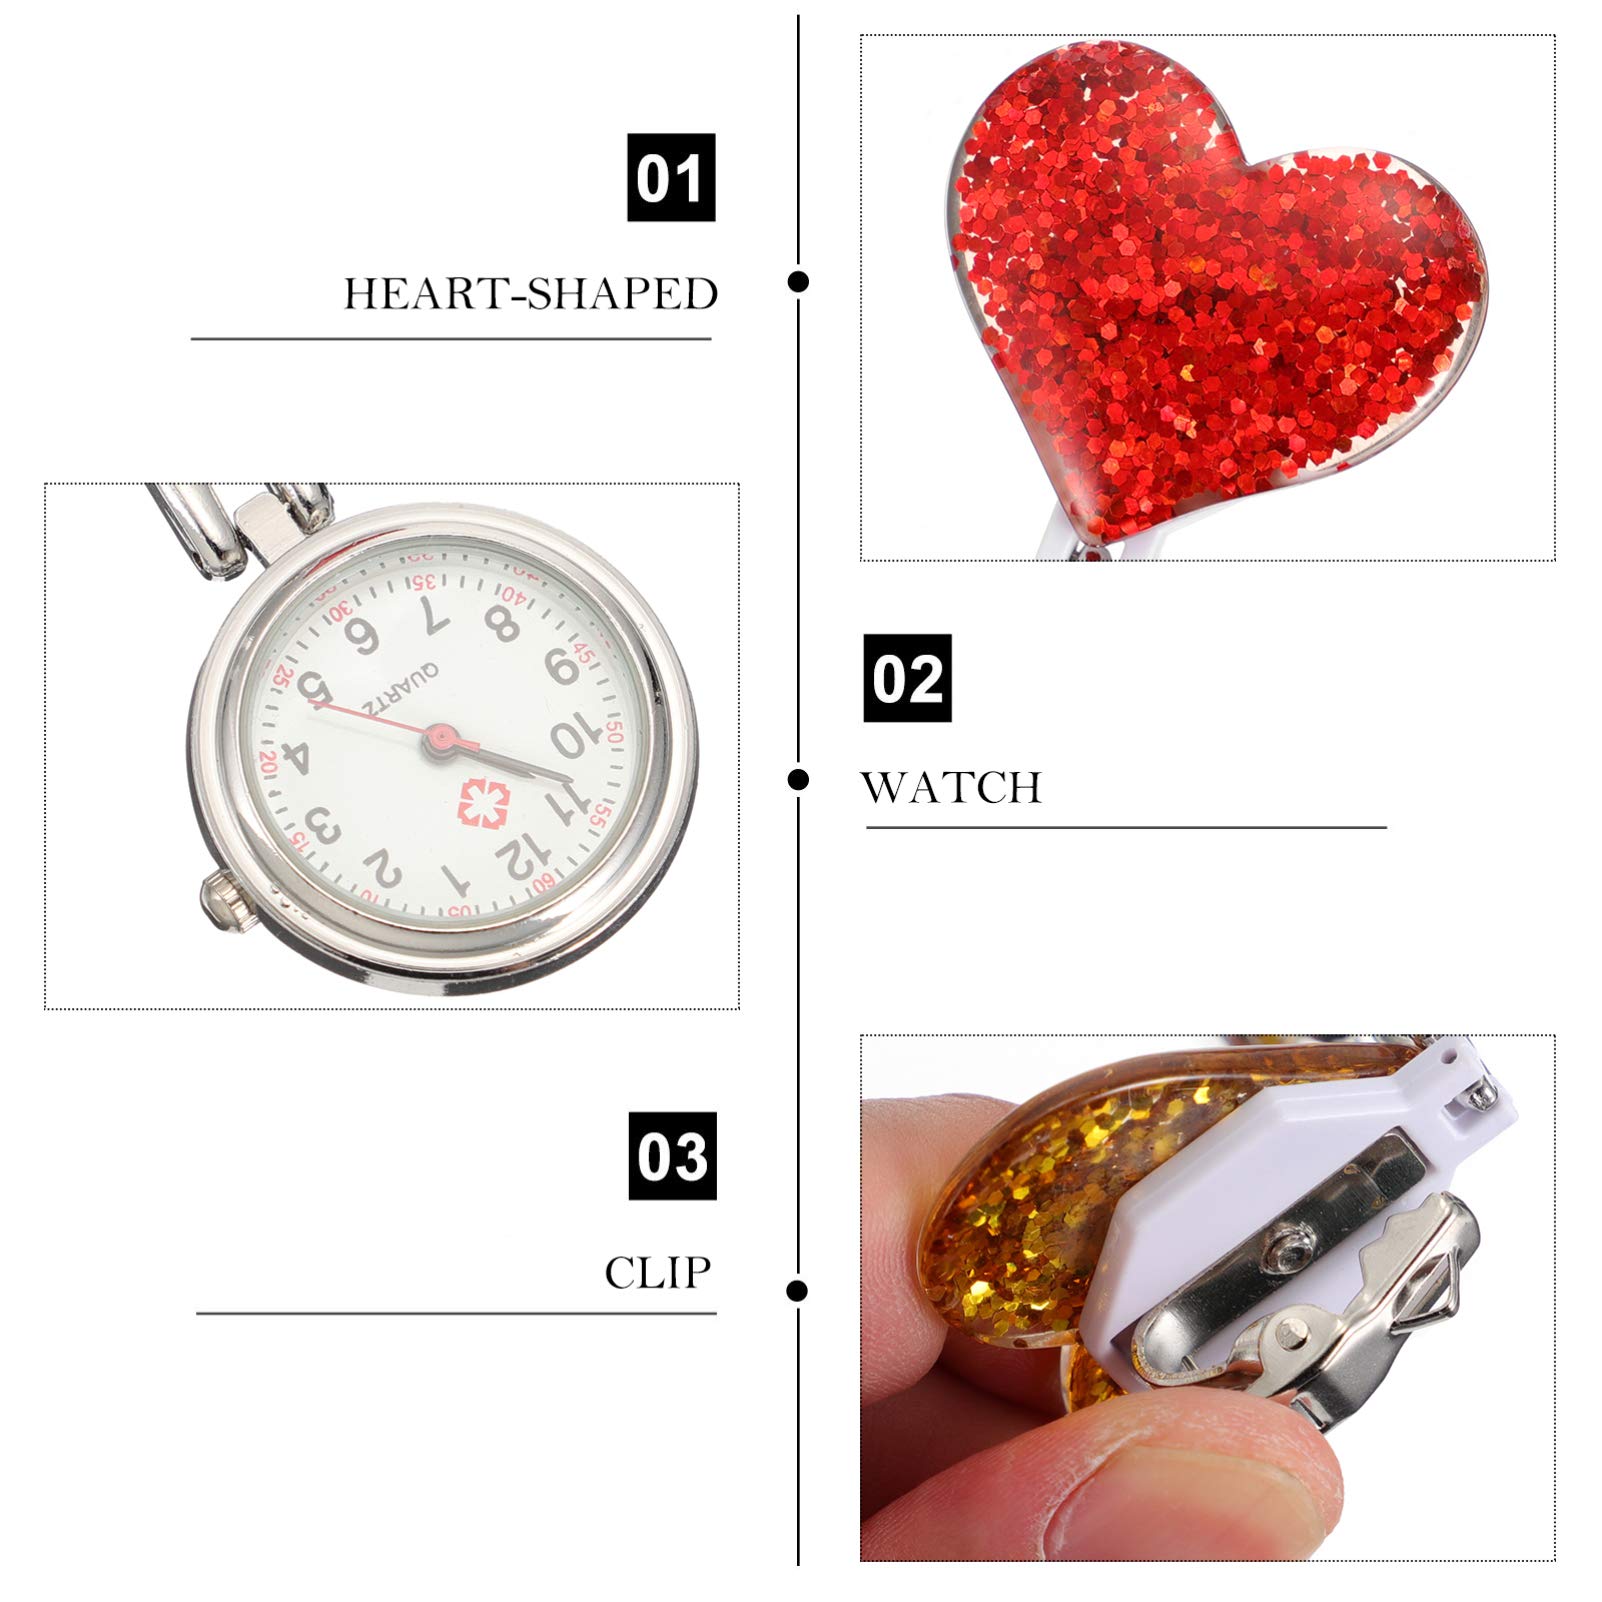 Hemobllo Nurse Watch, 3 Pcs Clip on Watch Nurse Fob Watch Quartz Movement Nursing Watch Glittering Heart Shaped Badge Pocket Watch Lapel Watch for Nurses Doctors